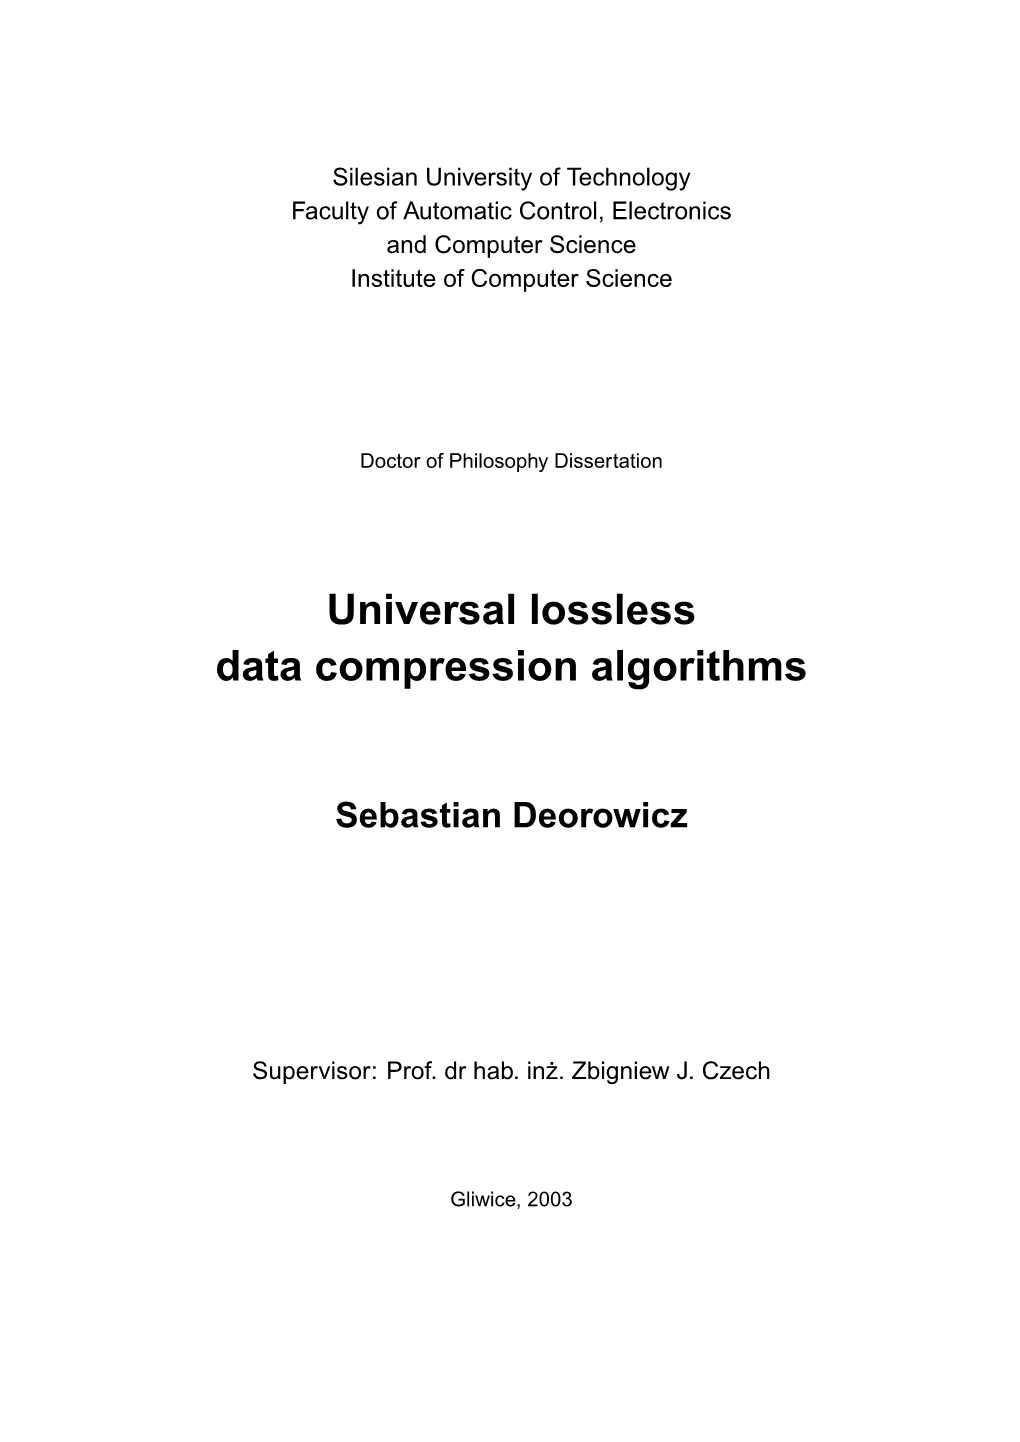 Universal Lossless Data Compression Algorithms